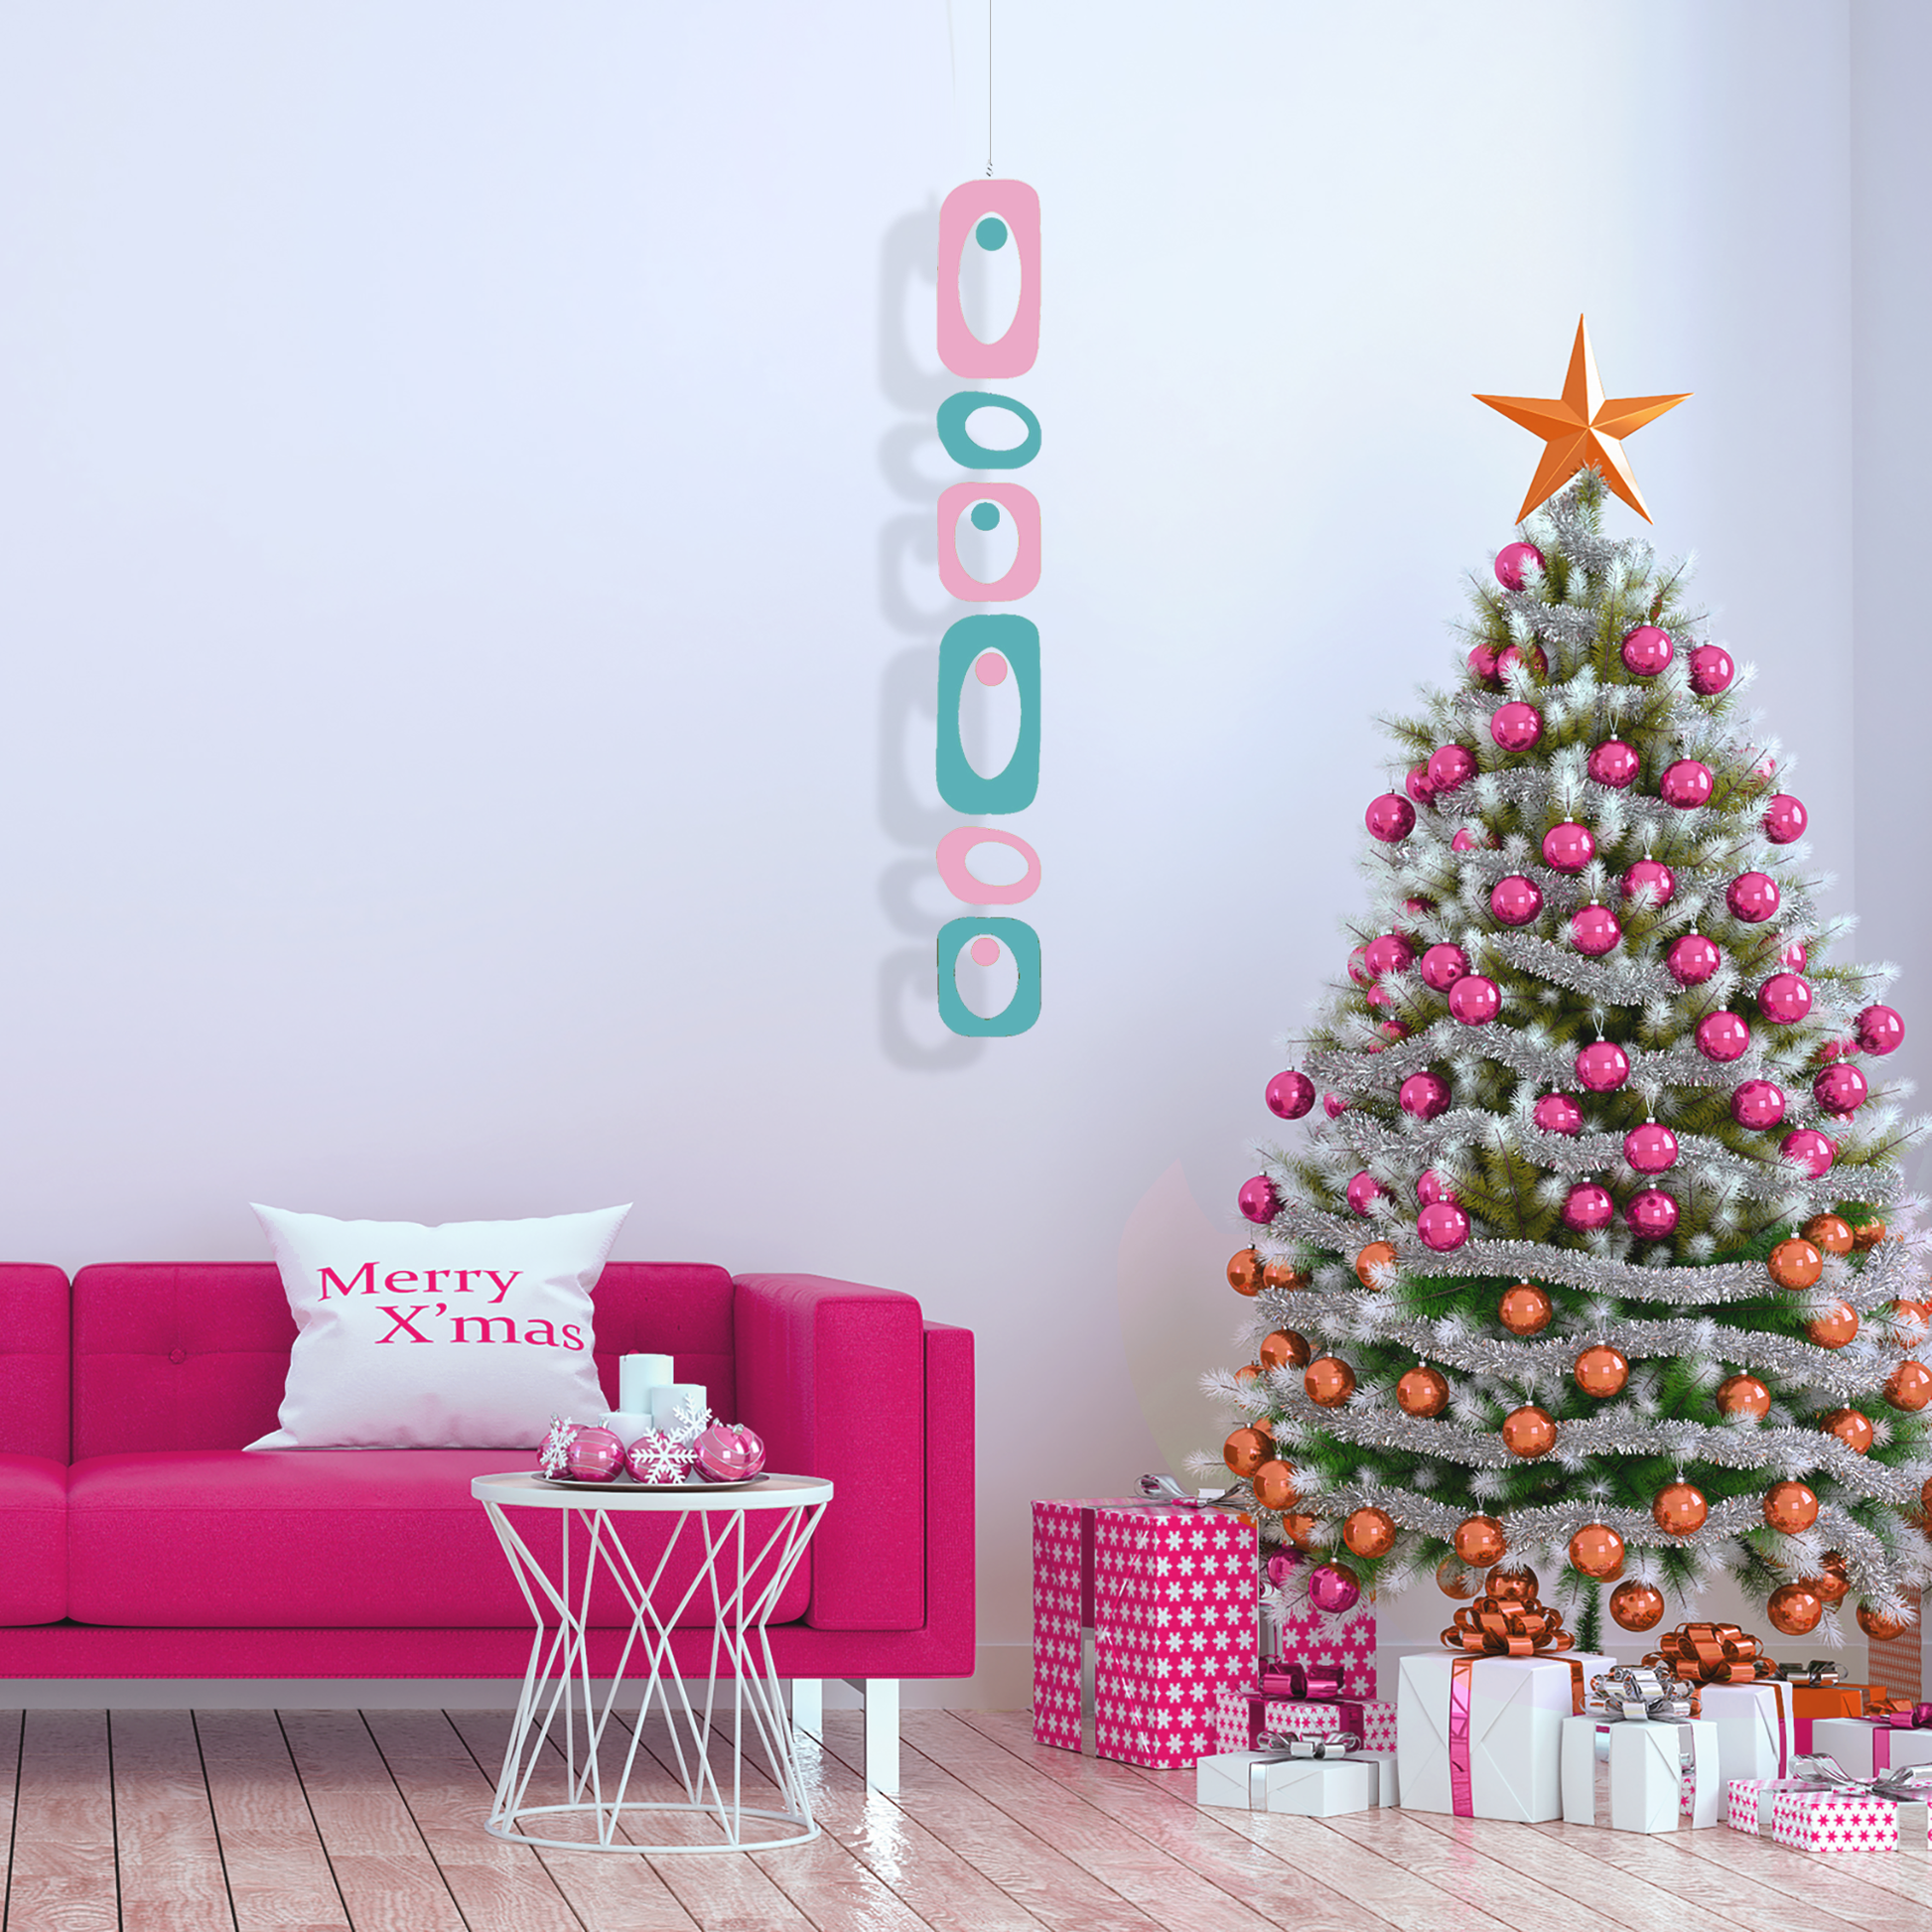 Retro Christmas Decorations in Alternative Mid Century Colors ...